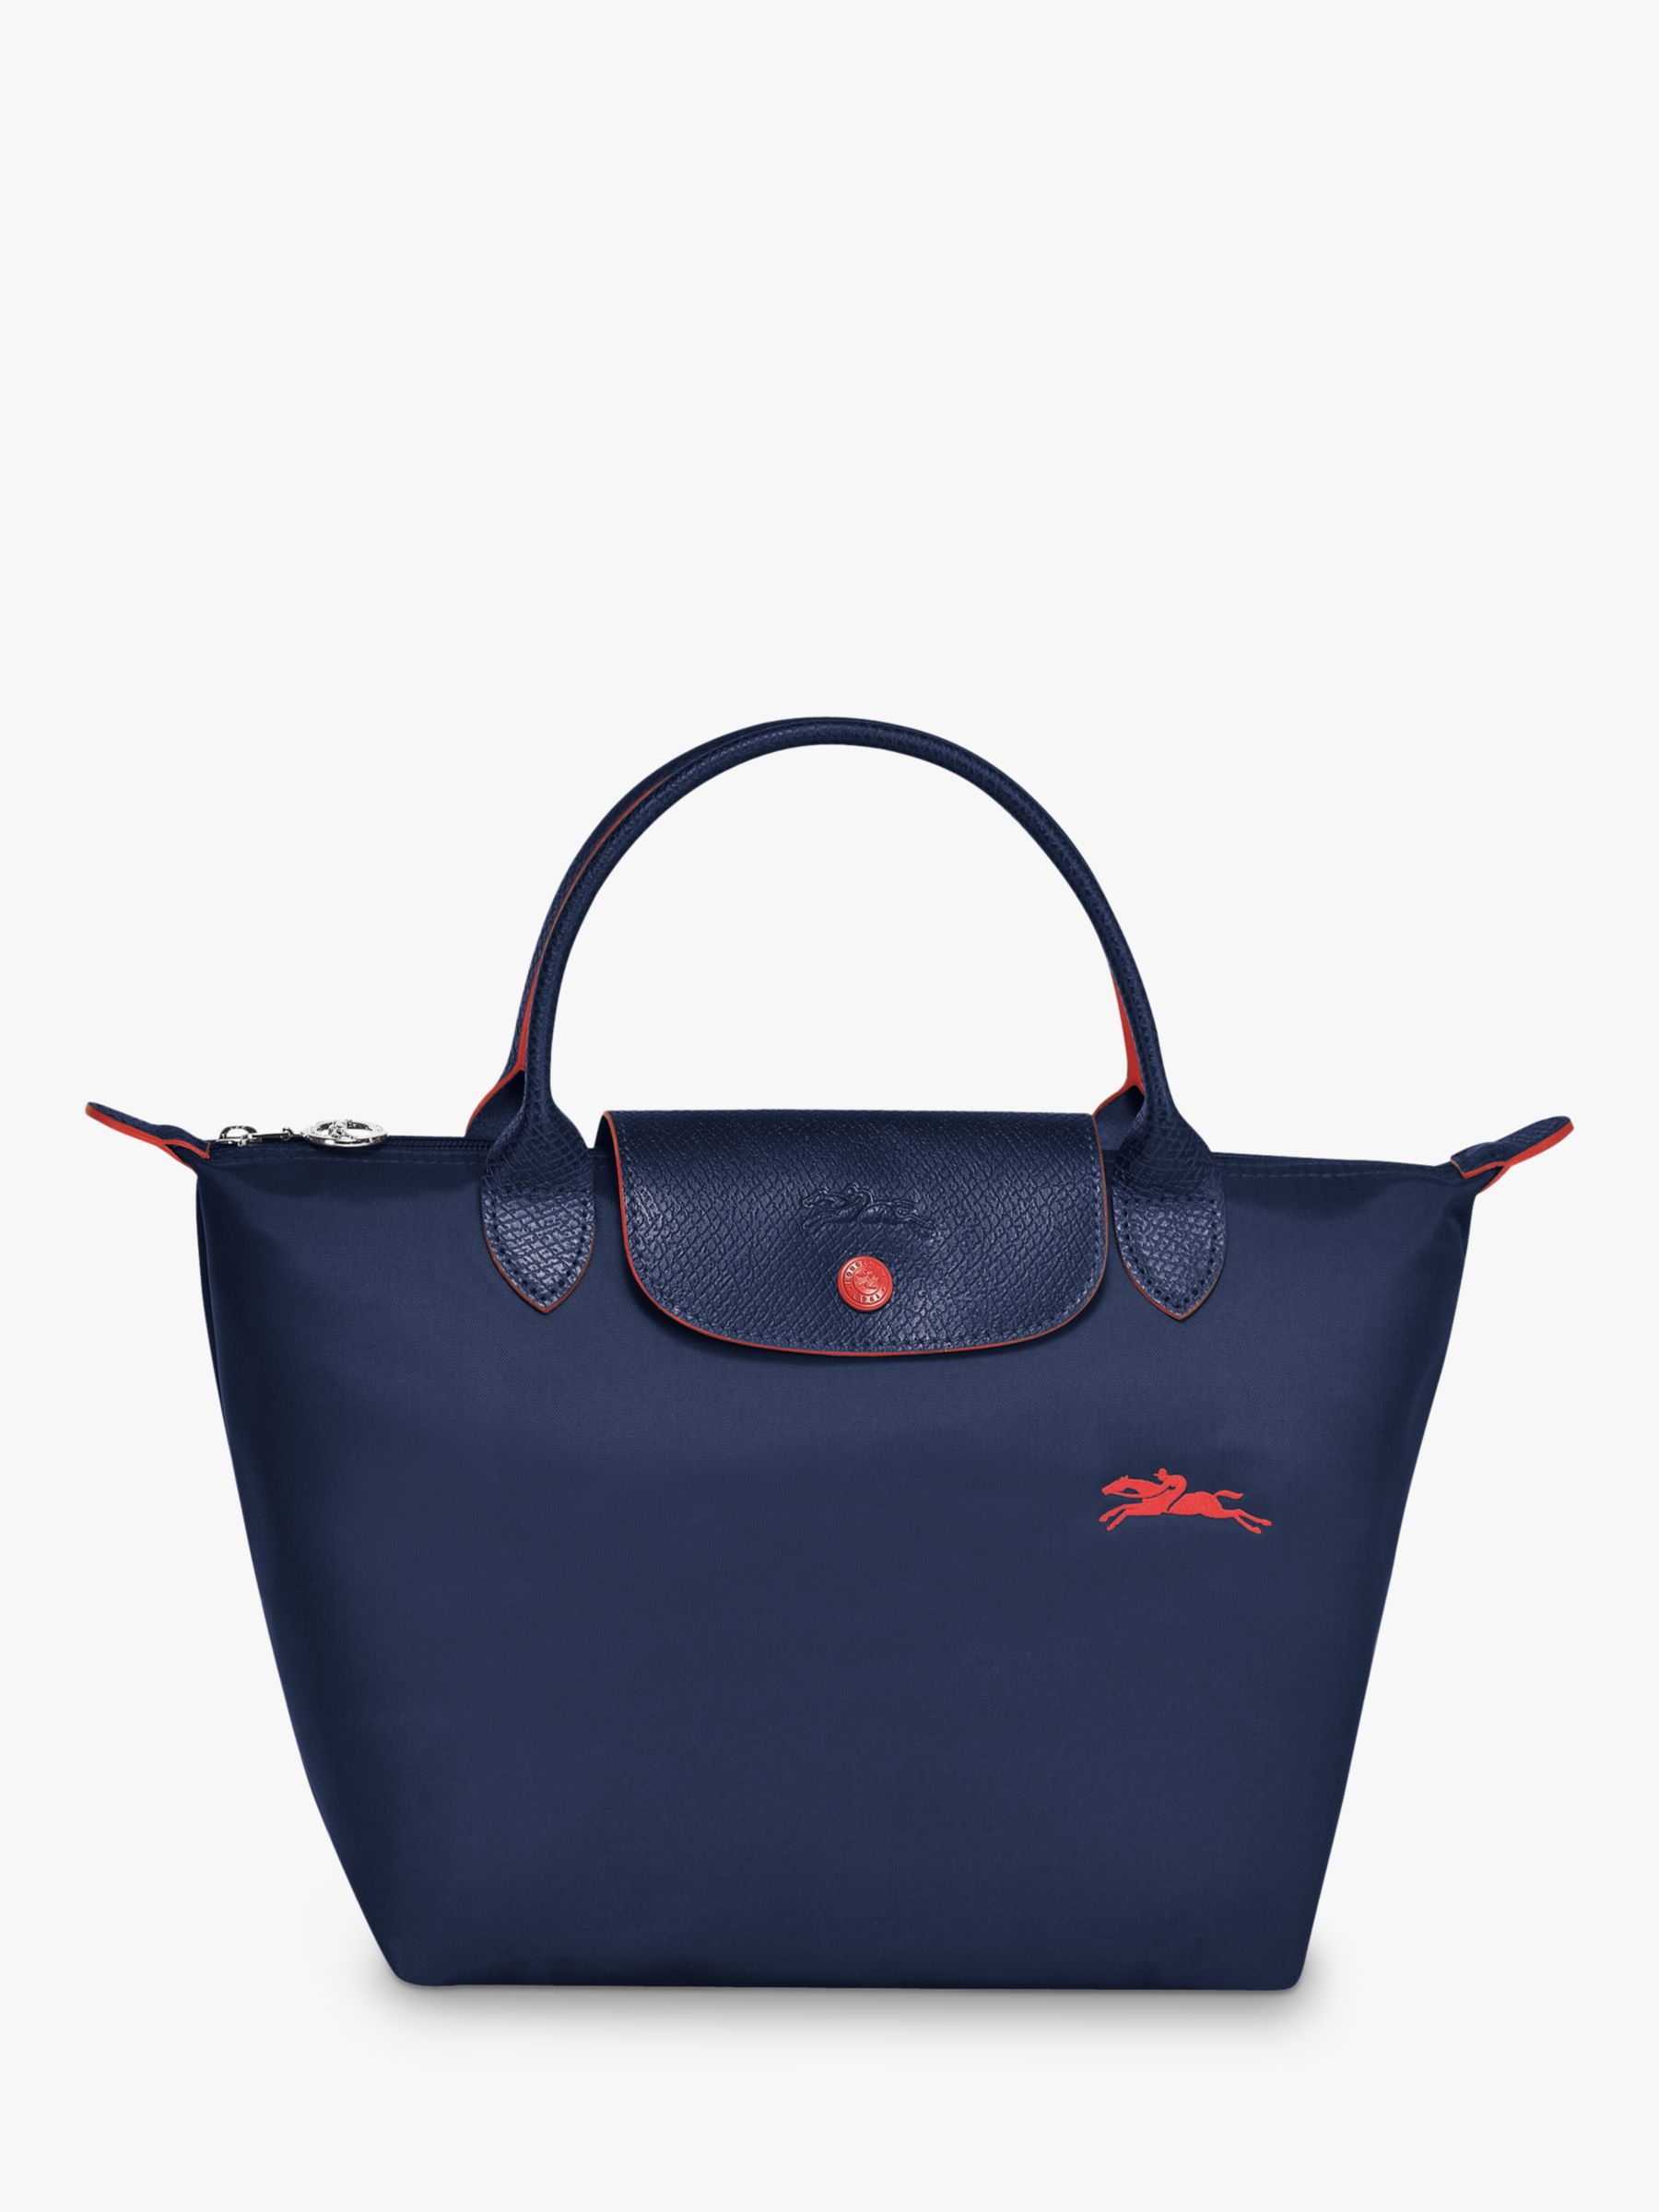 Longchamp Le Pliage Club Small Top Handle Bag, Navy at John Lewis & Partners